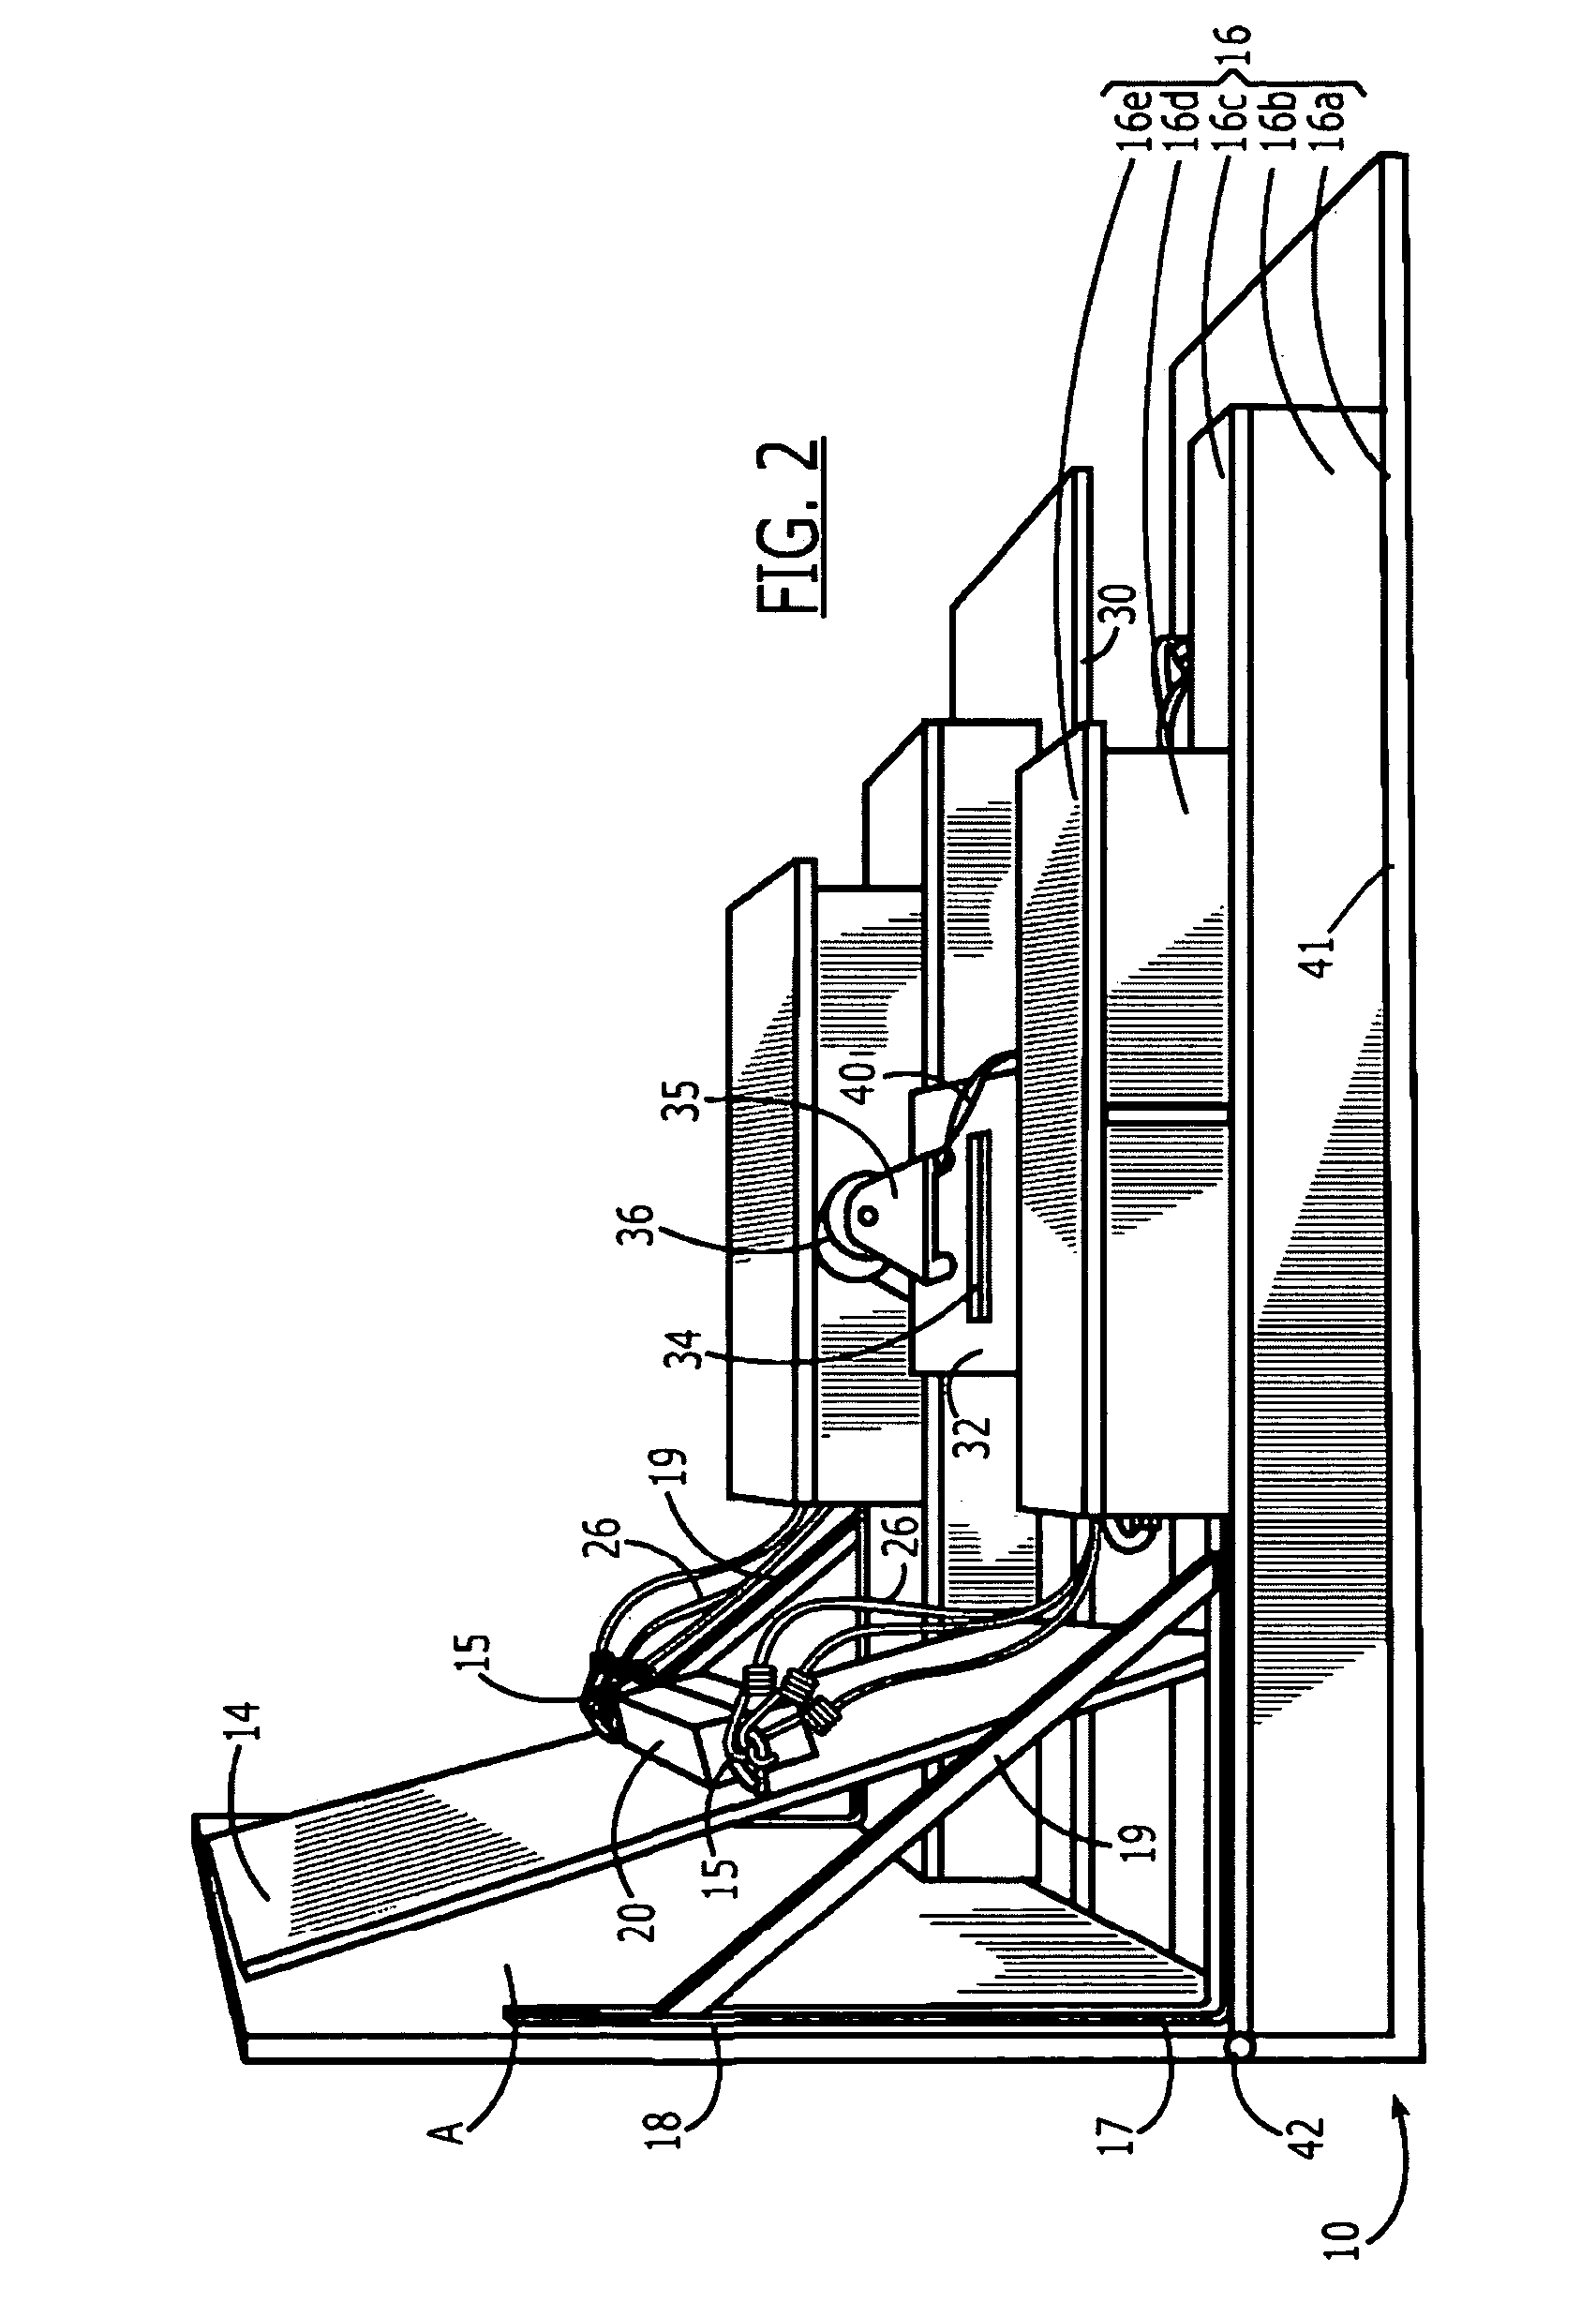 Rehabilitation leg press apparatus and method